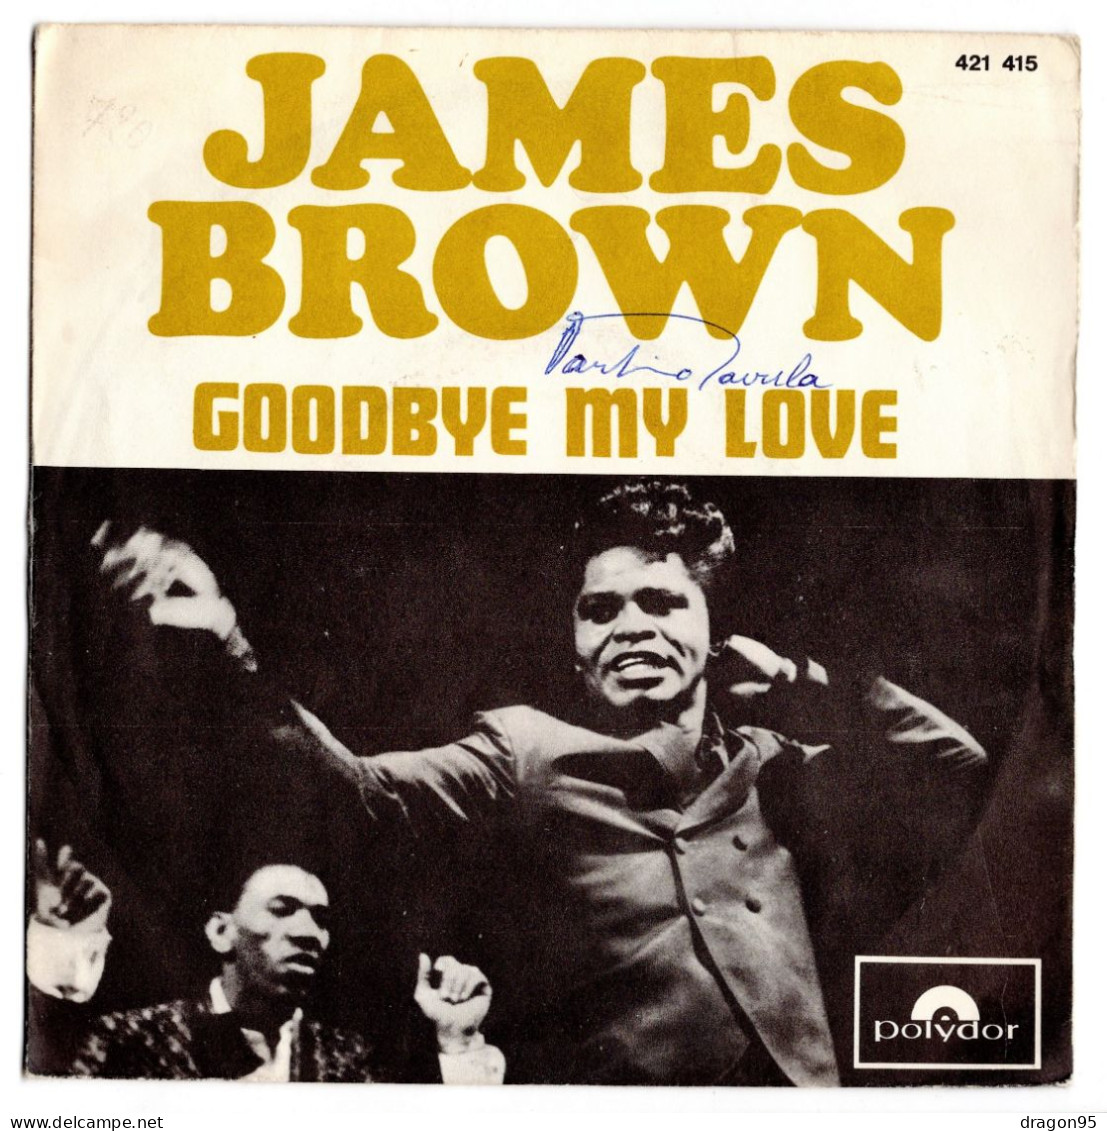 JAMES BROWN : Goodbye My Love - POLYDOR 421 415 - FRANCE - 1968 - Soul - R&B